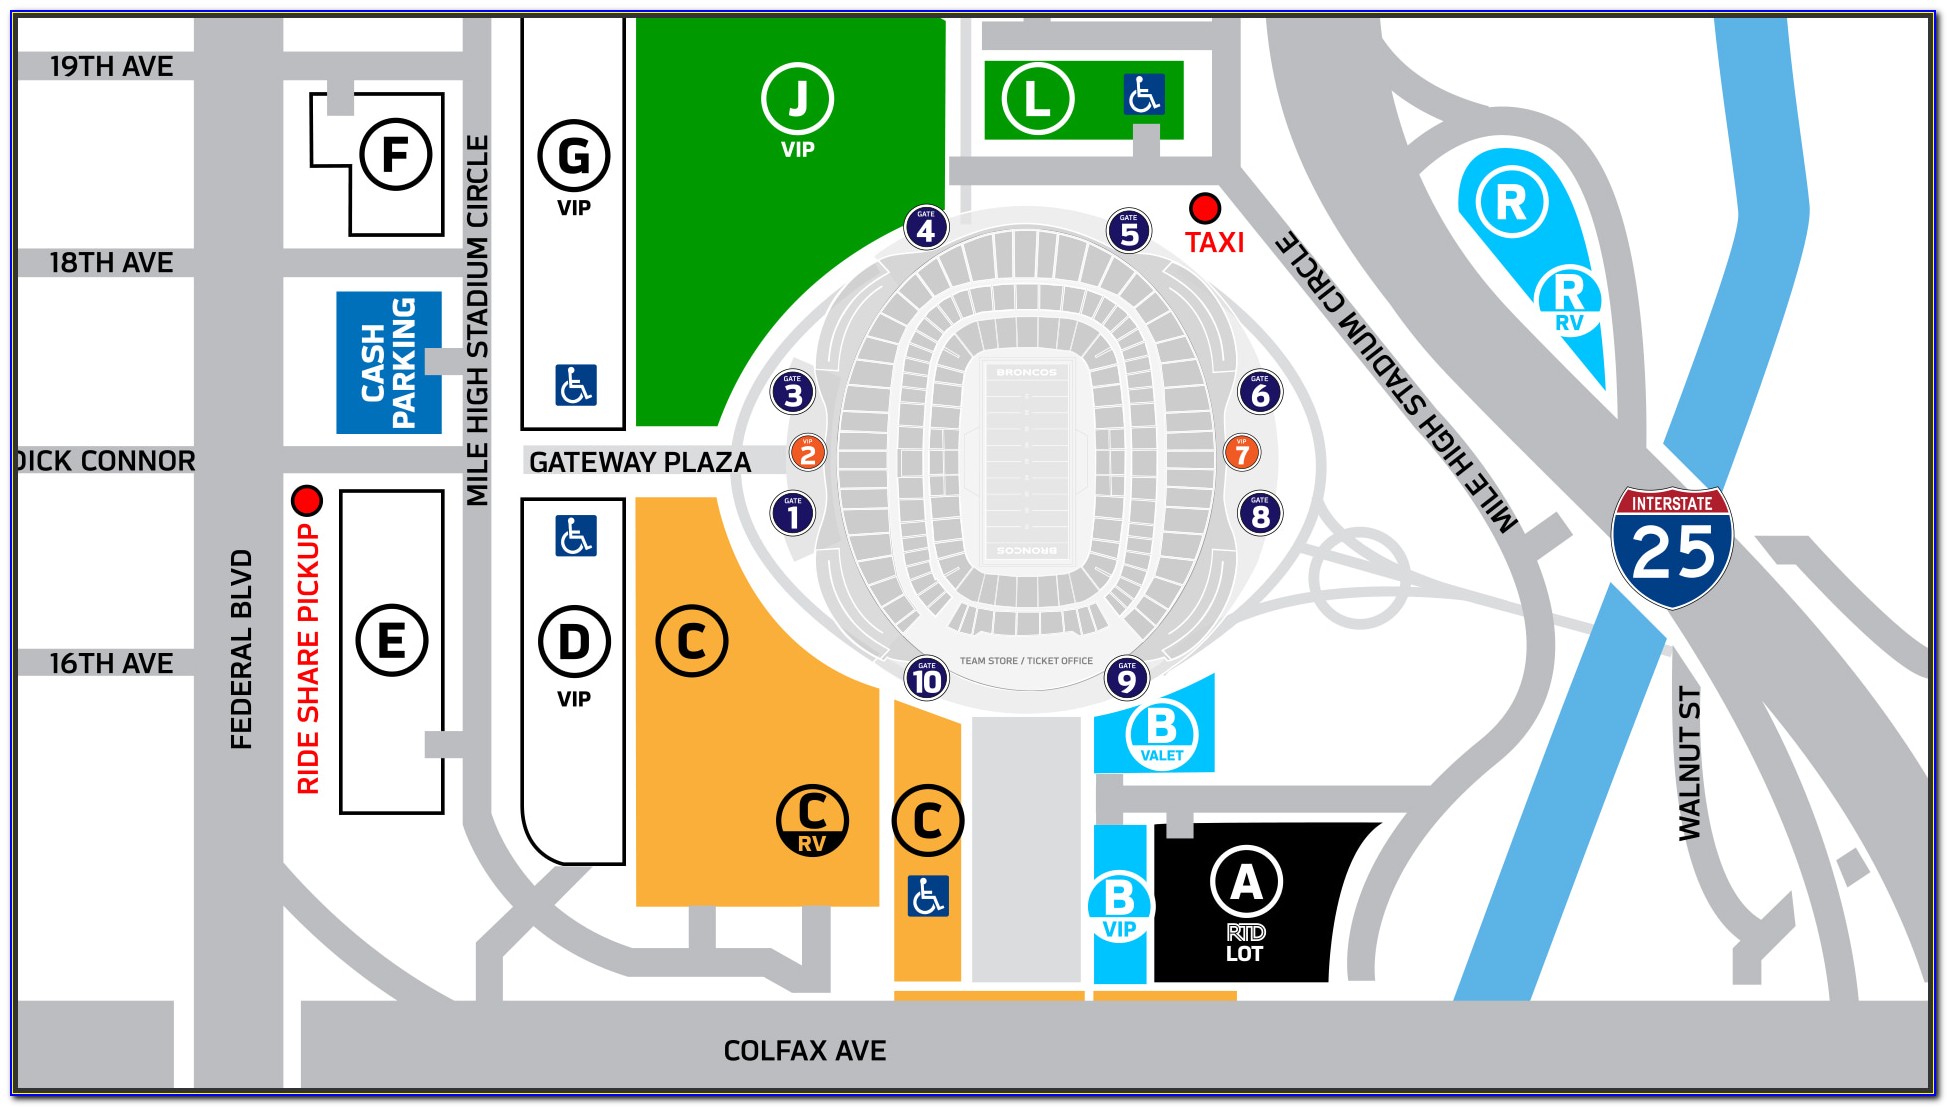 Mile High Stadium Parking Map